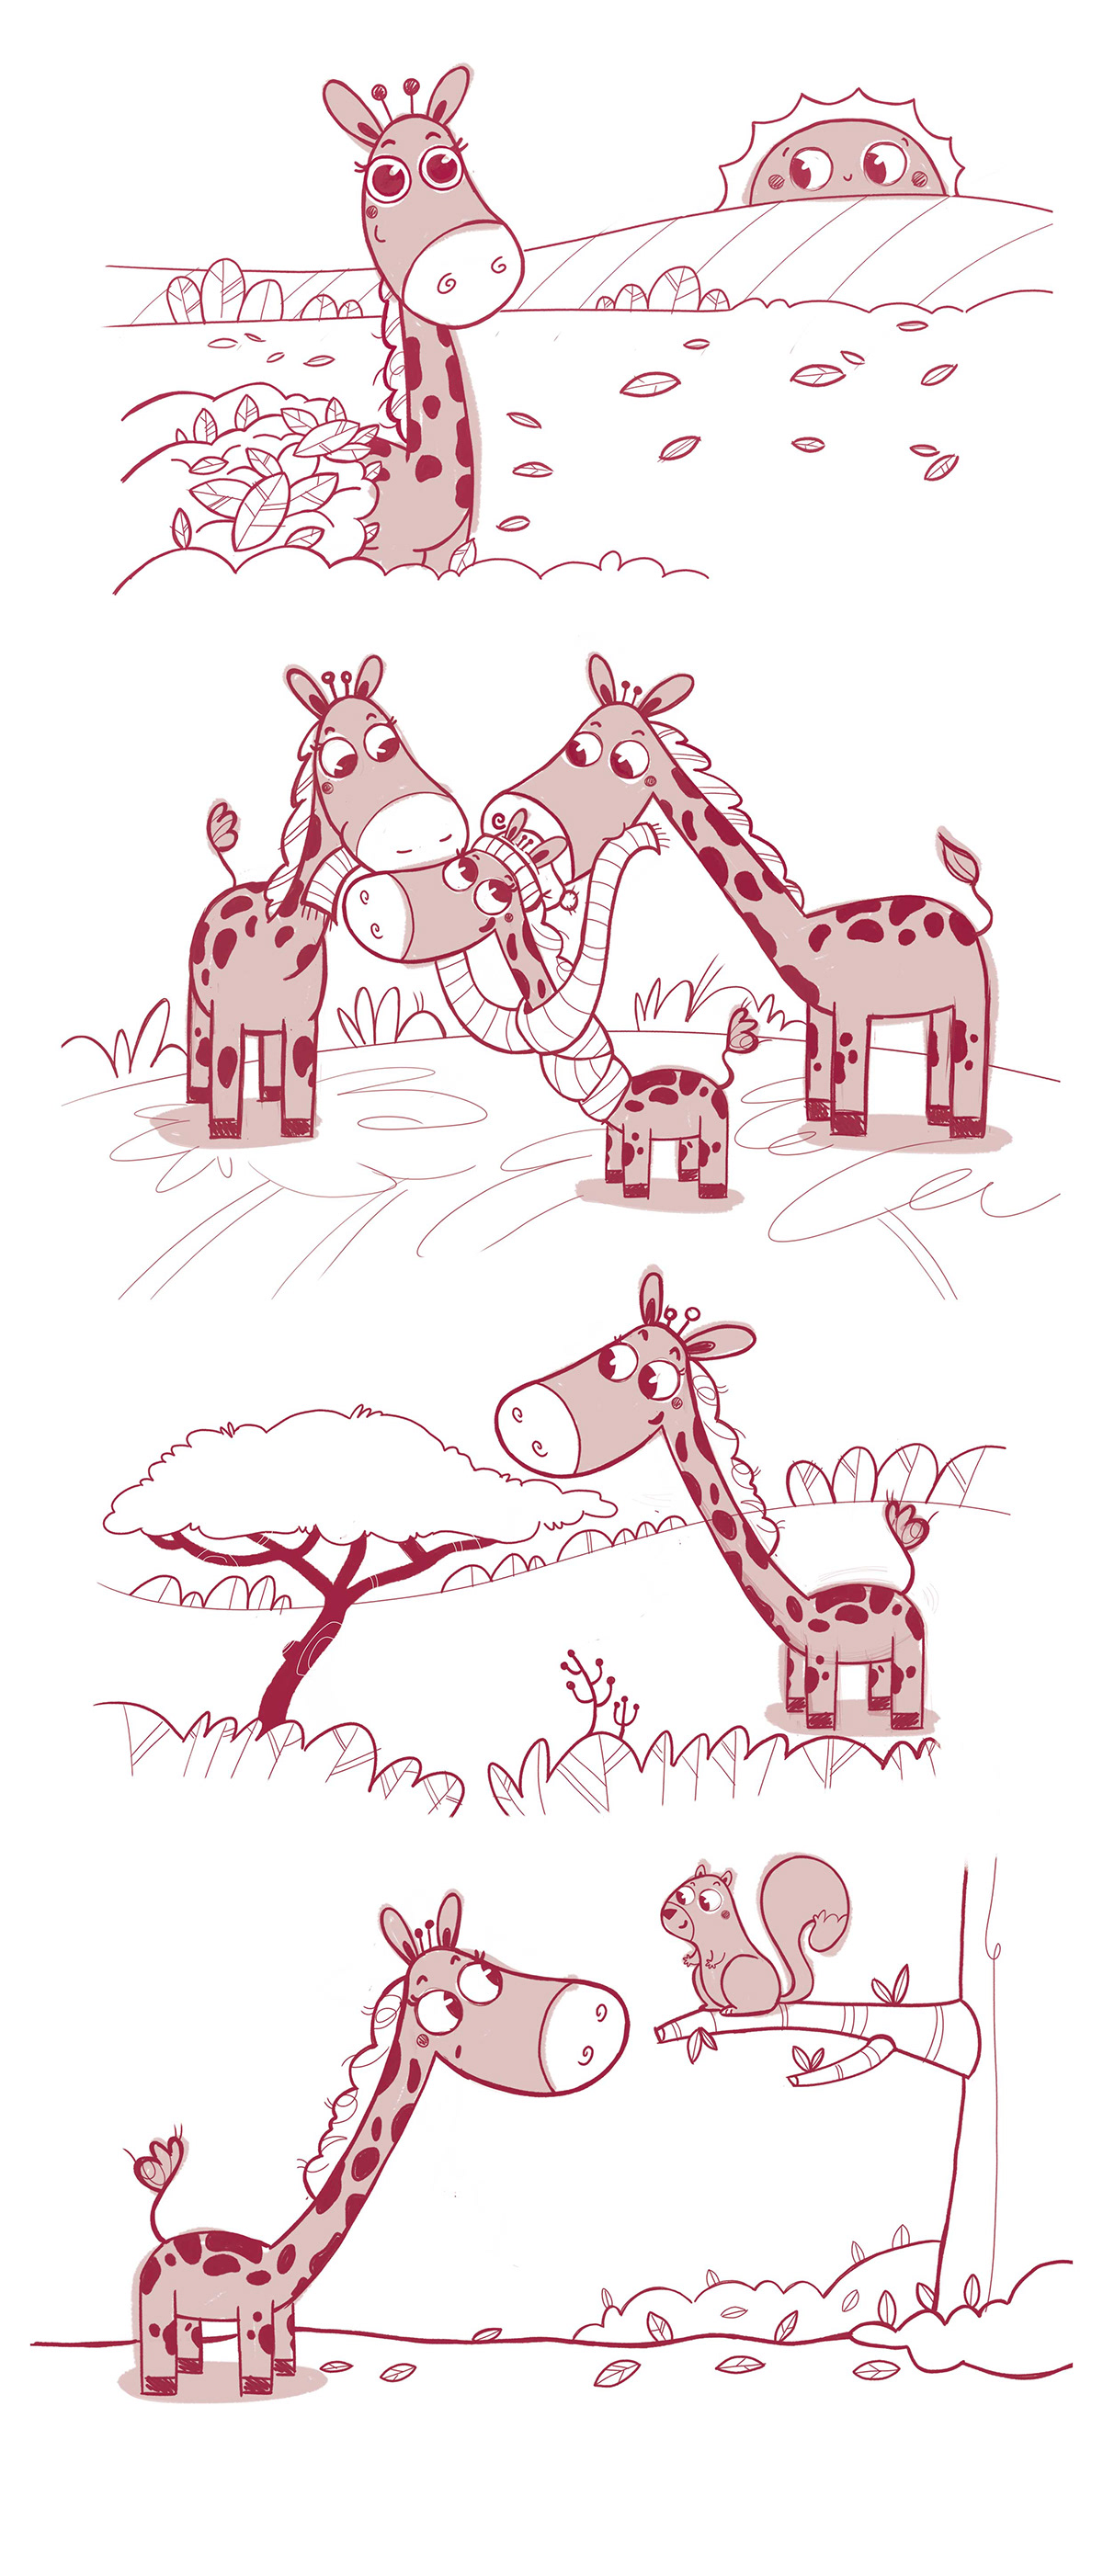 VeoVeo editorialedebé ilustracioninfantil jirafa Mono hipopotamo edebé editorial ilustradora infantil